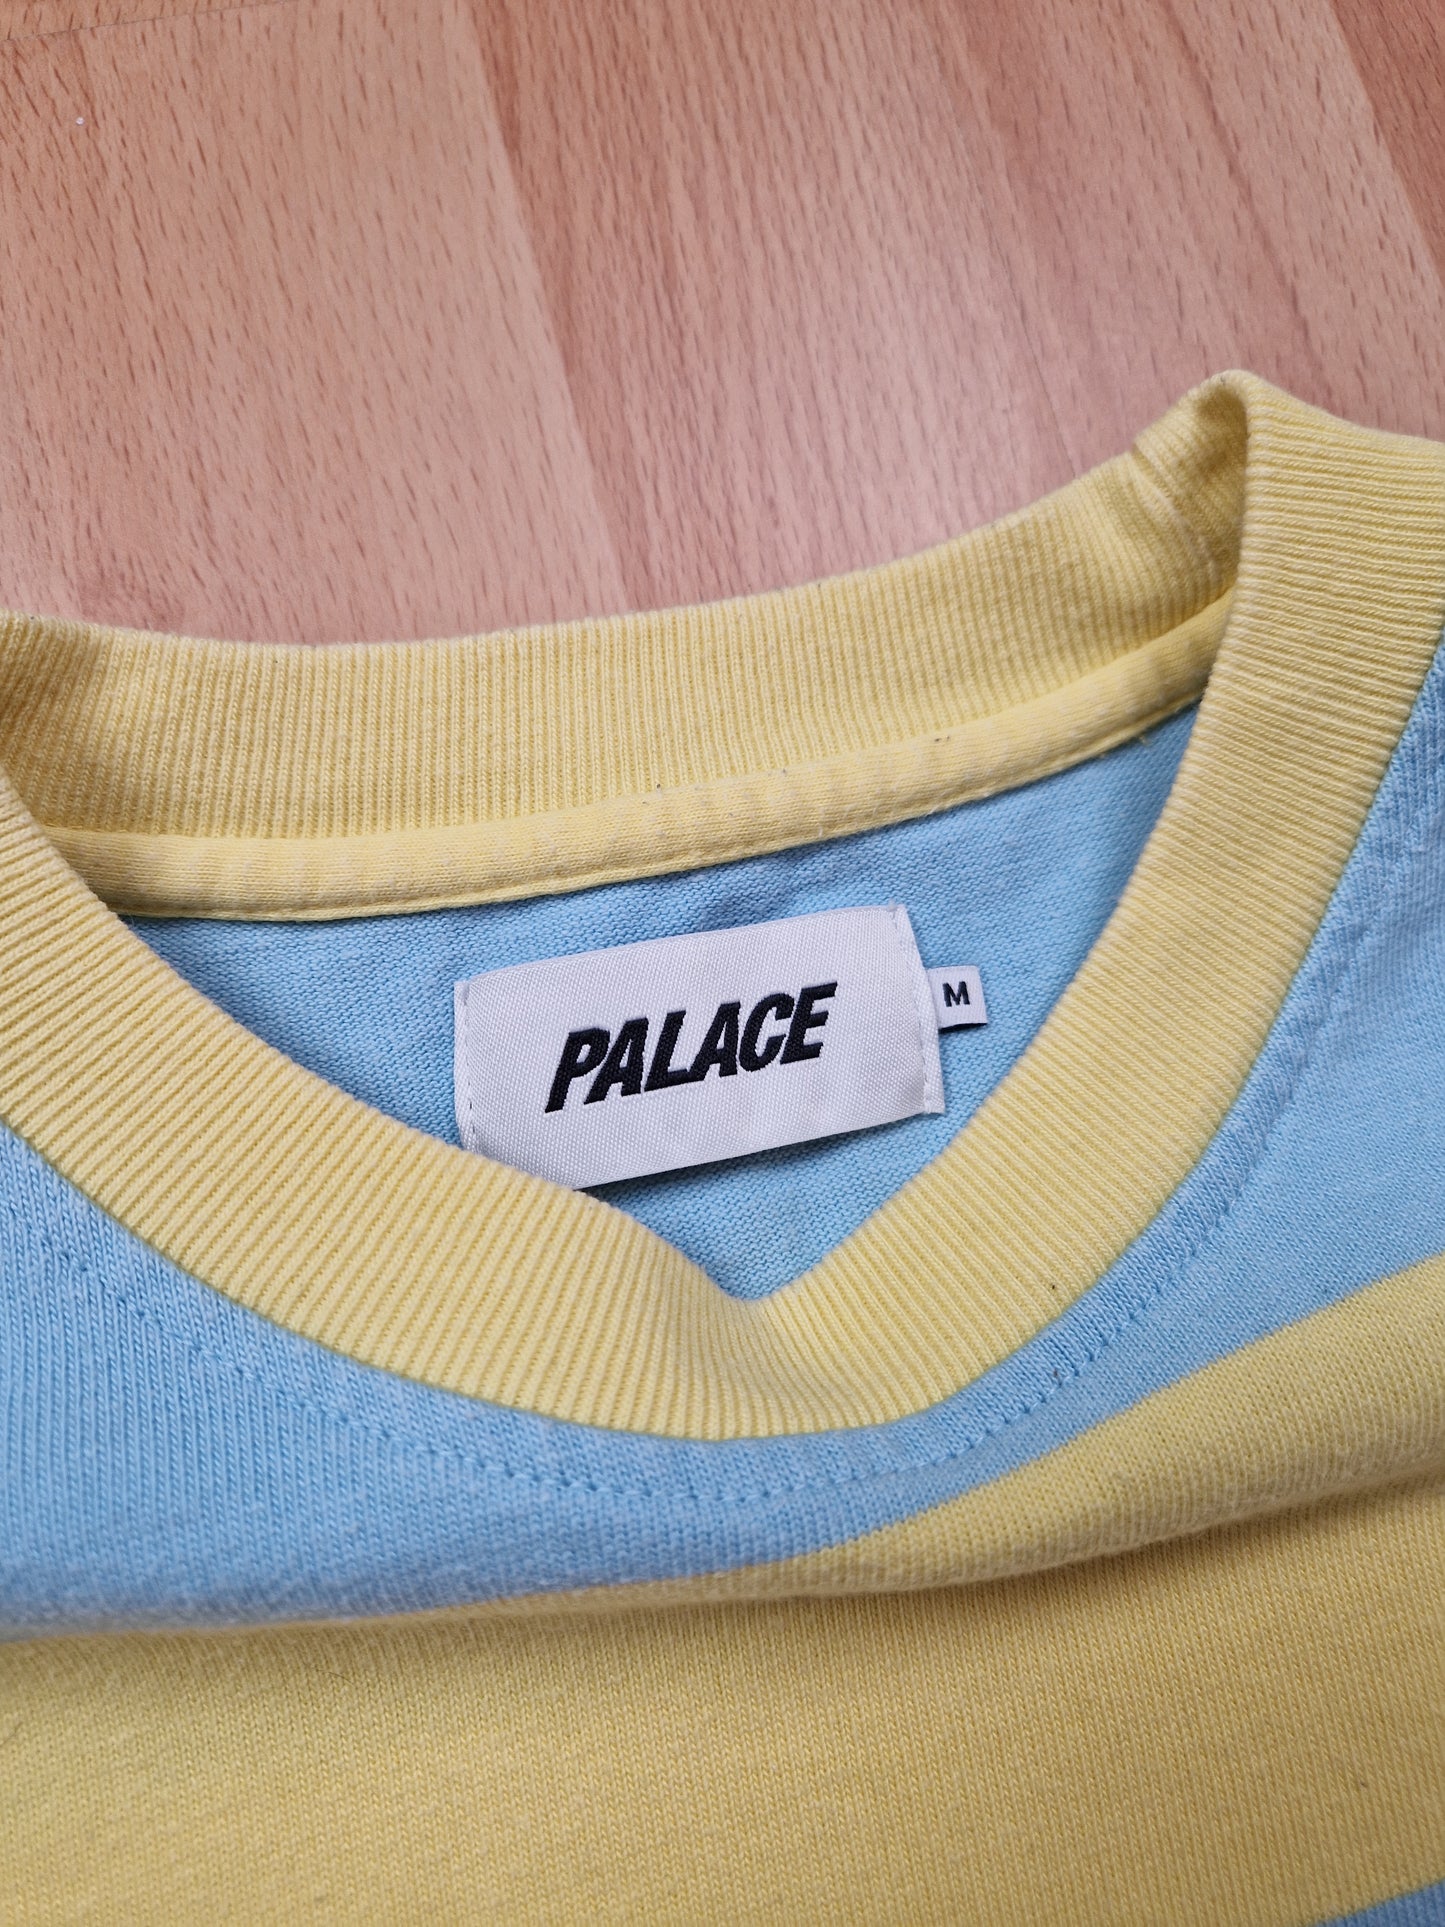 Palace 'Getting Thinner Crew' Sweatshirt (M)